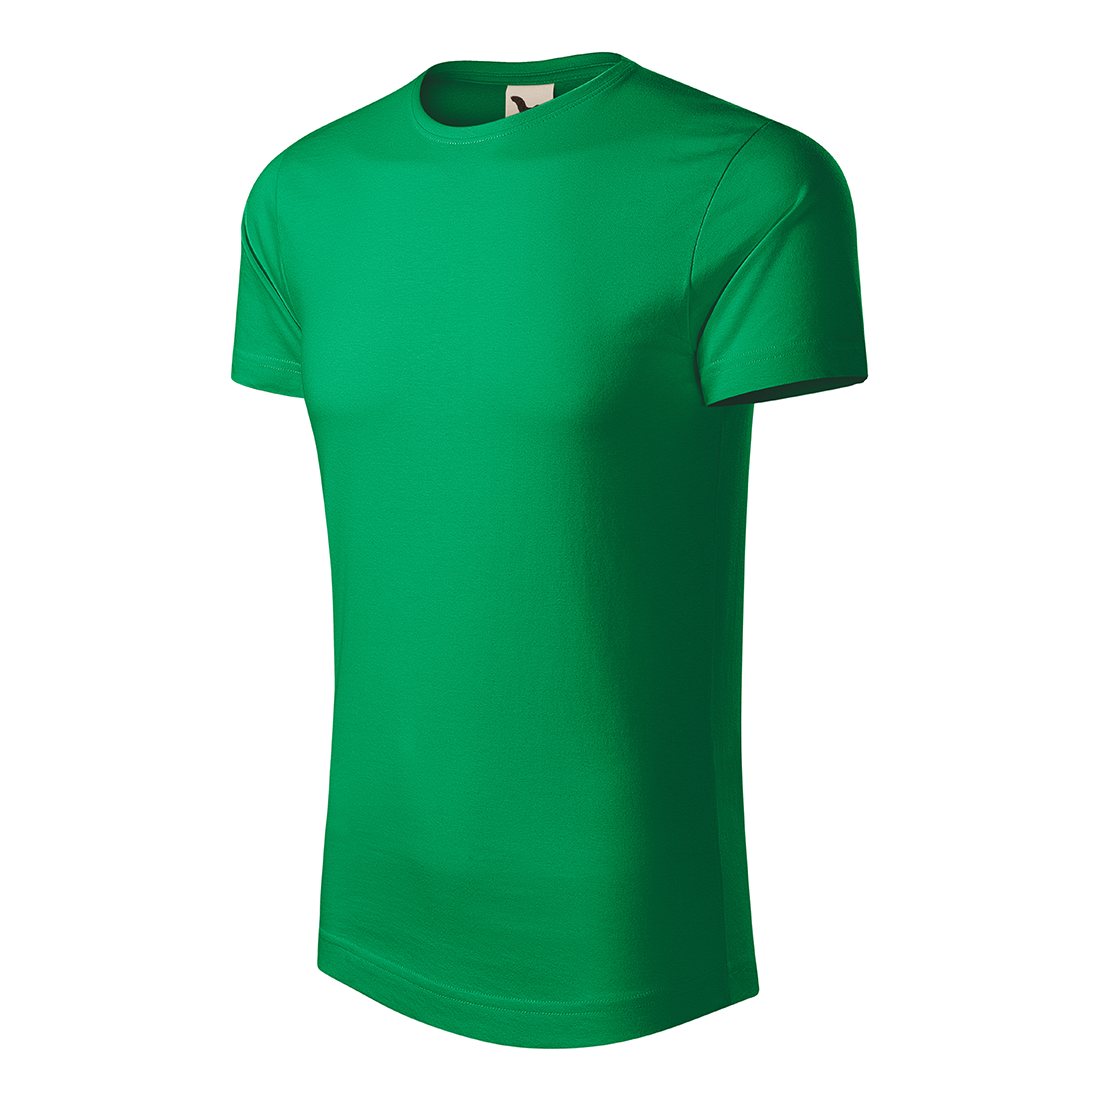 Men's Organic Cotton T-shirt - Safetywear